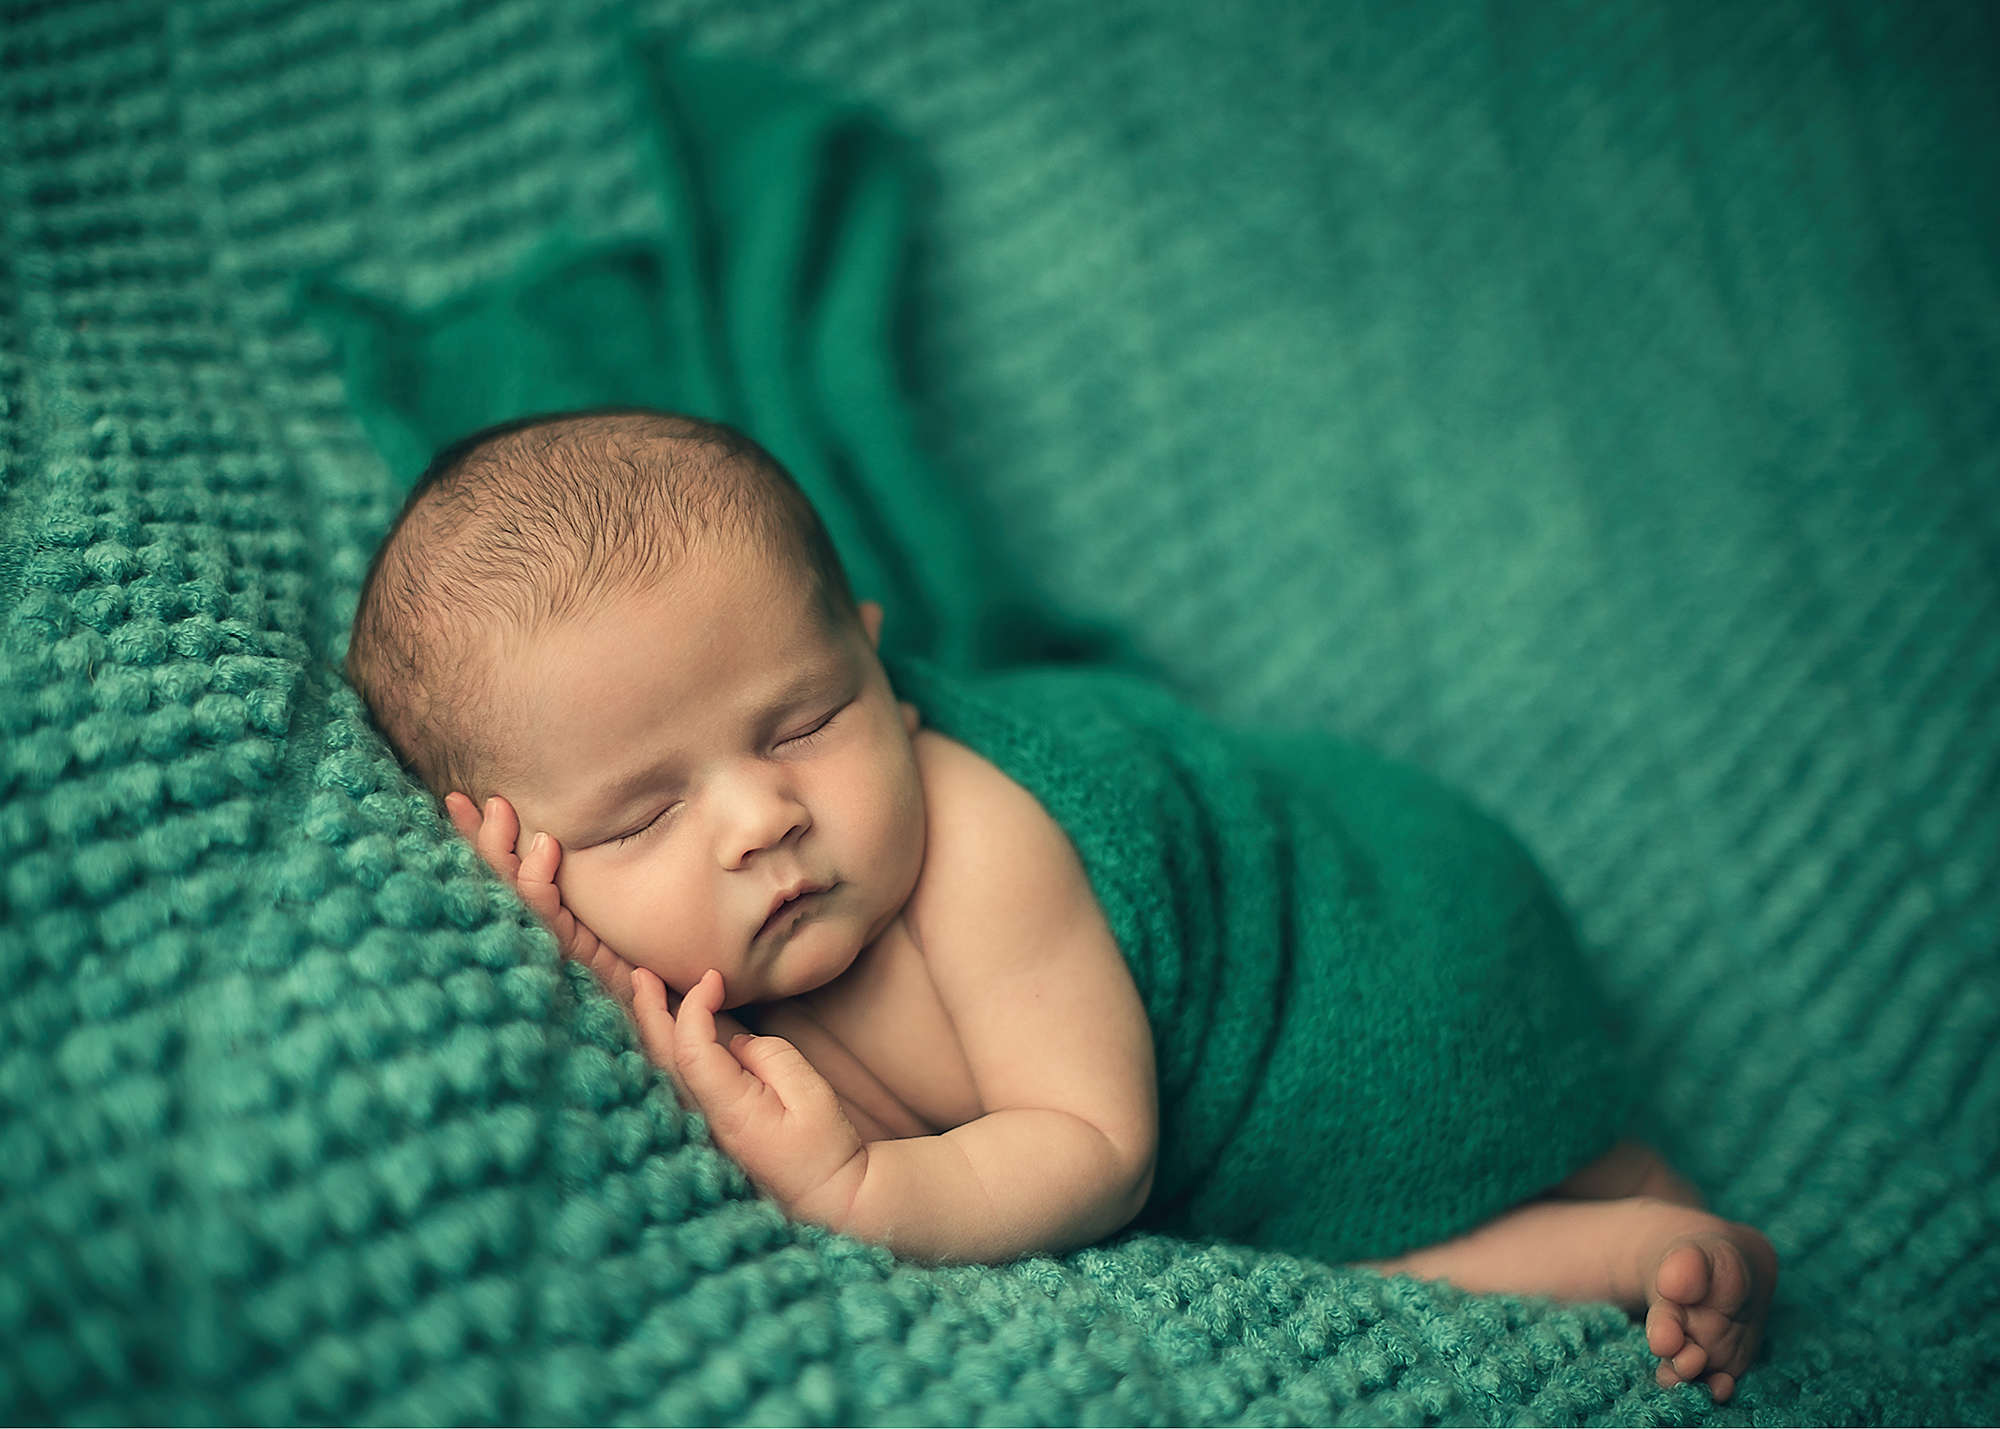 newborn photography art artistic spring portrait family photography photoshoot laura rachel photographer 3